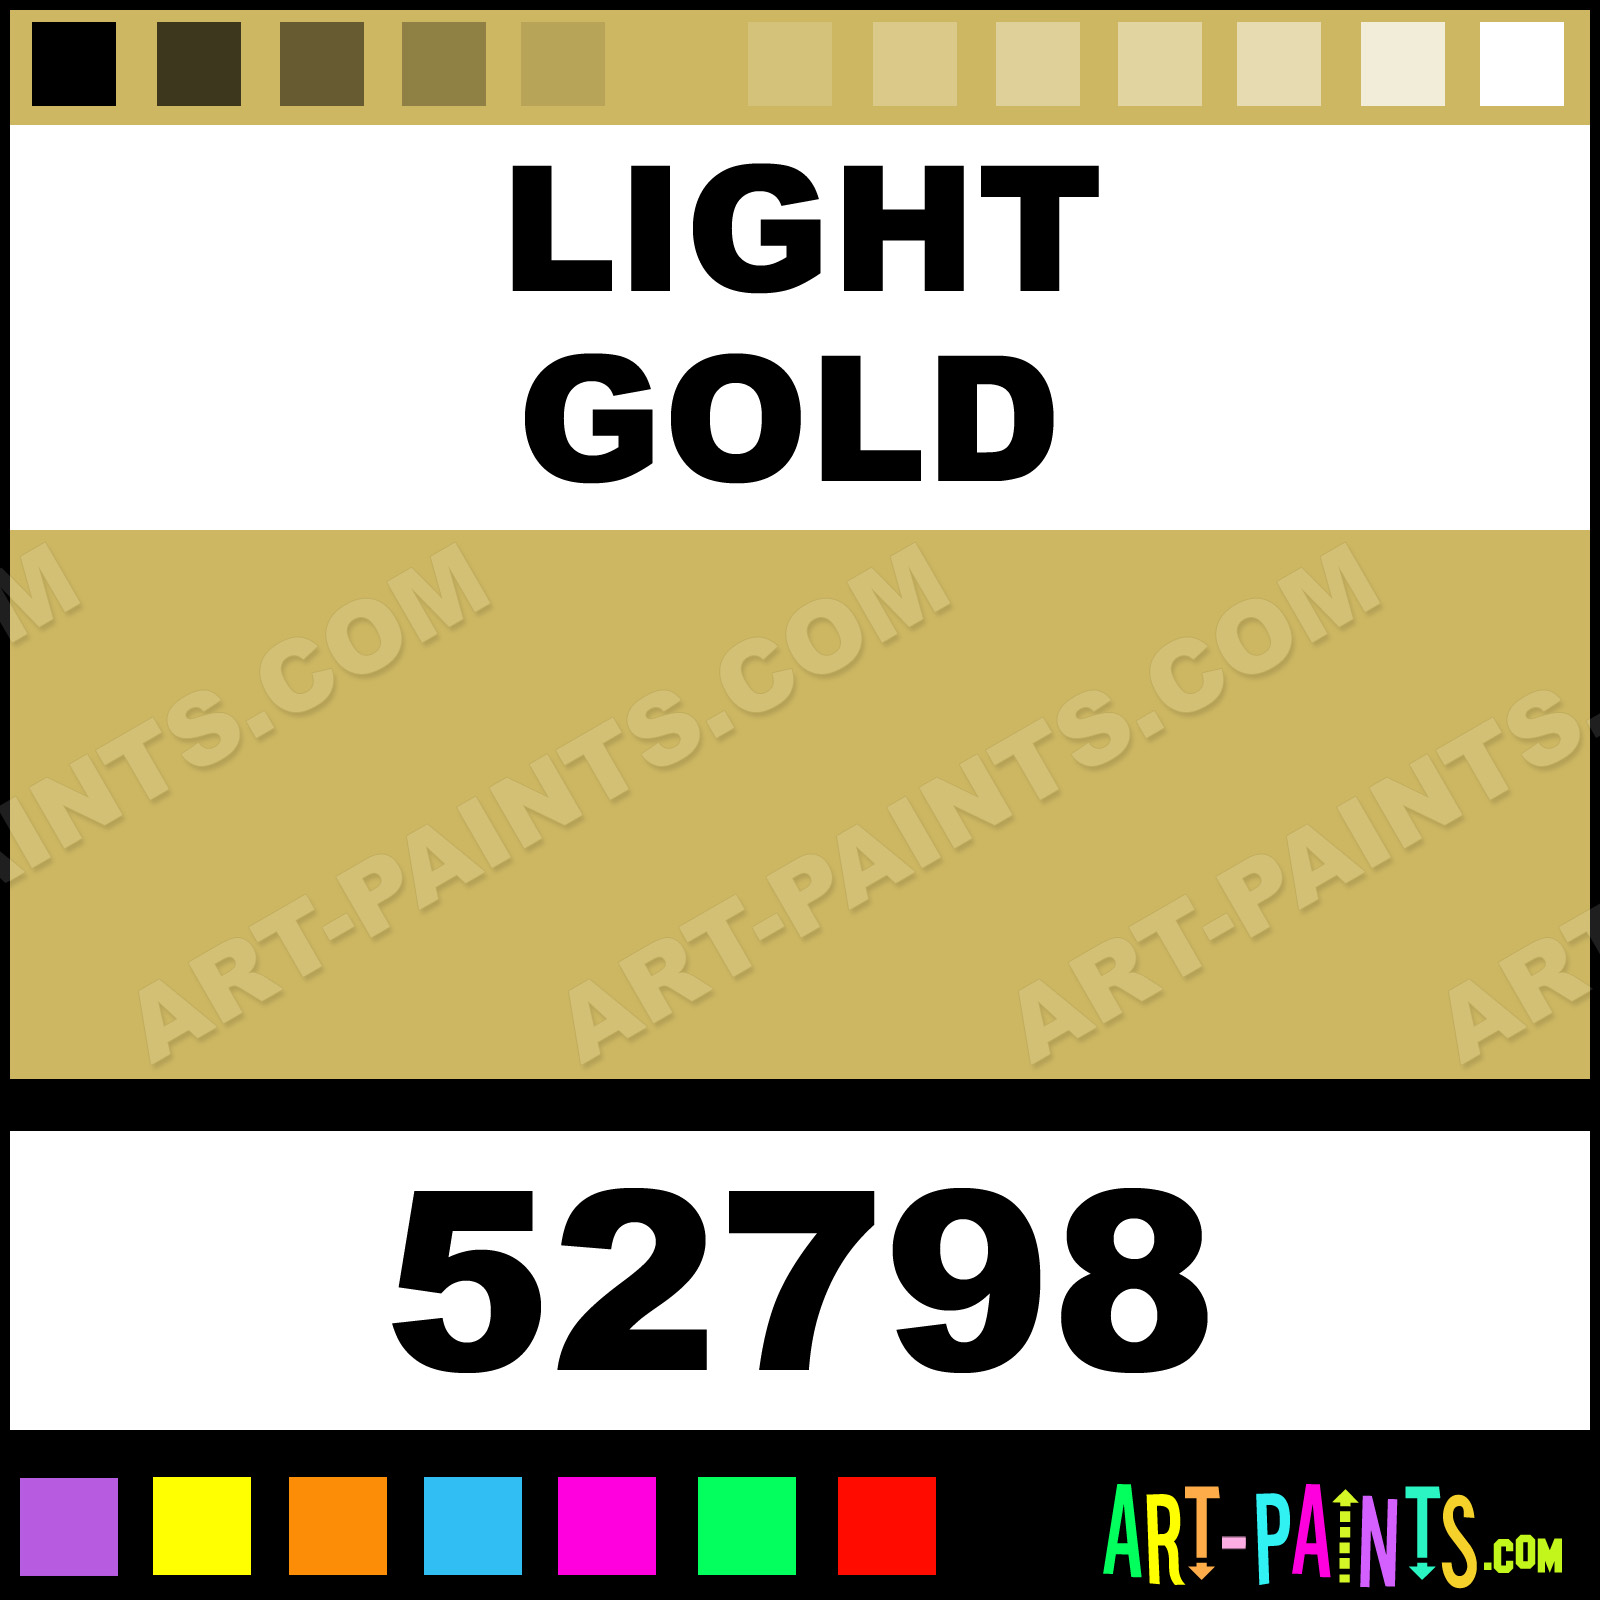 Light Gold Standard Series Acrylic Paints - Light Paint, Light Gold Color, Amsterdam Standard Paint, CDB761 - Art-Paints.com